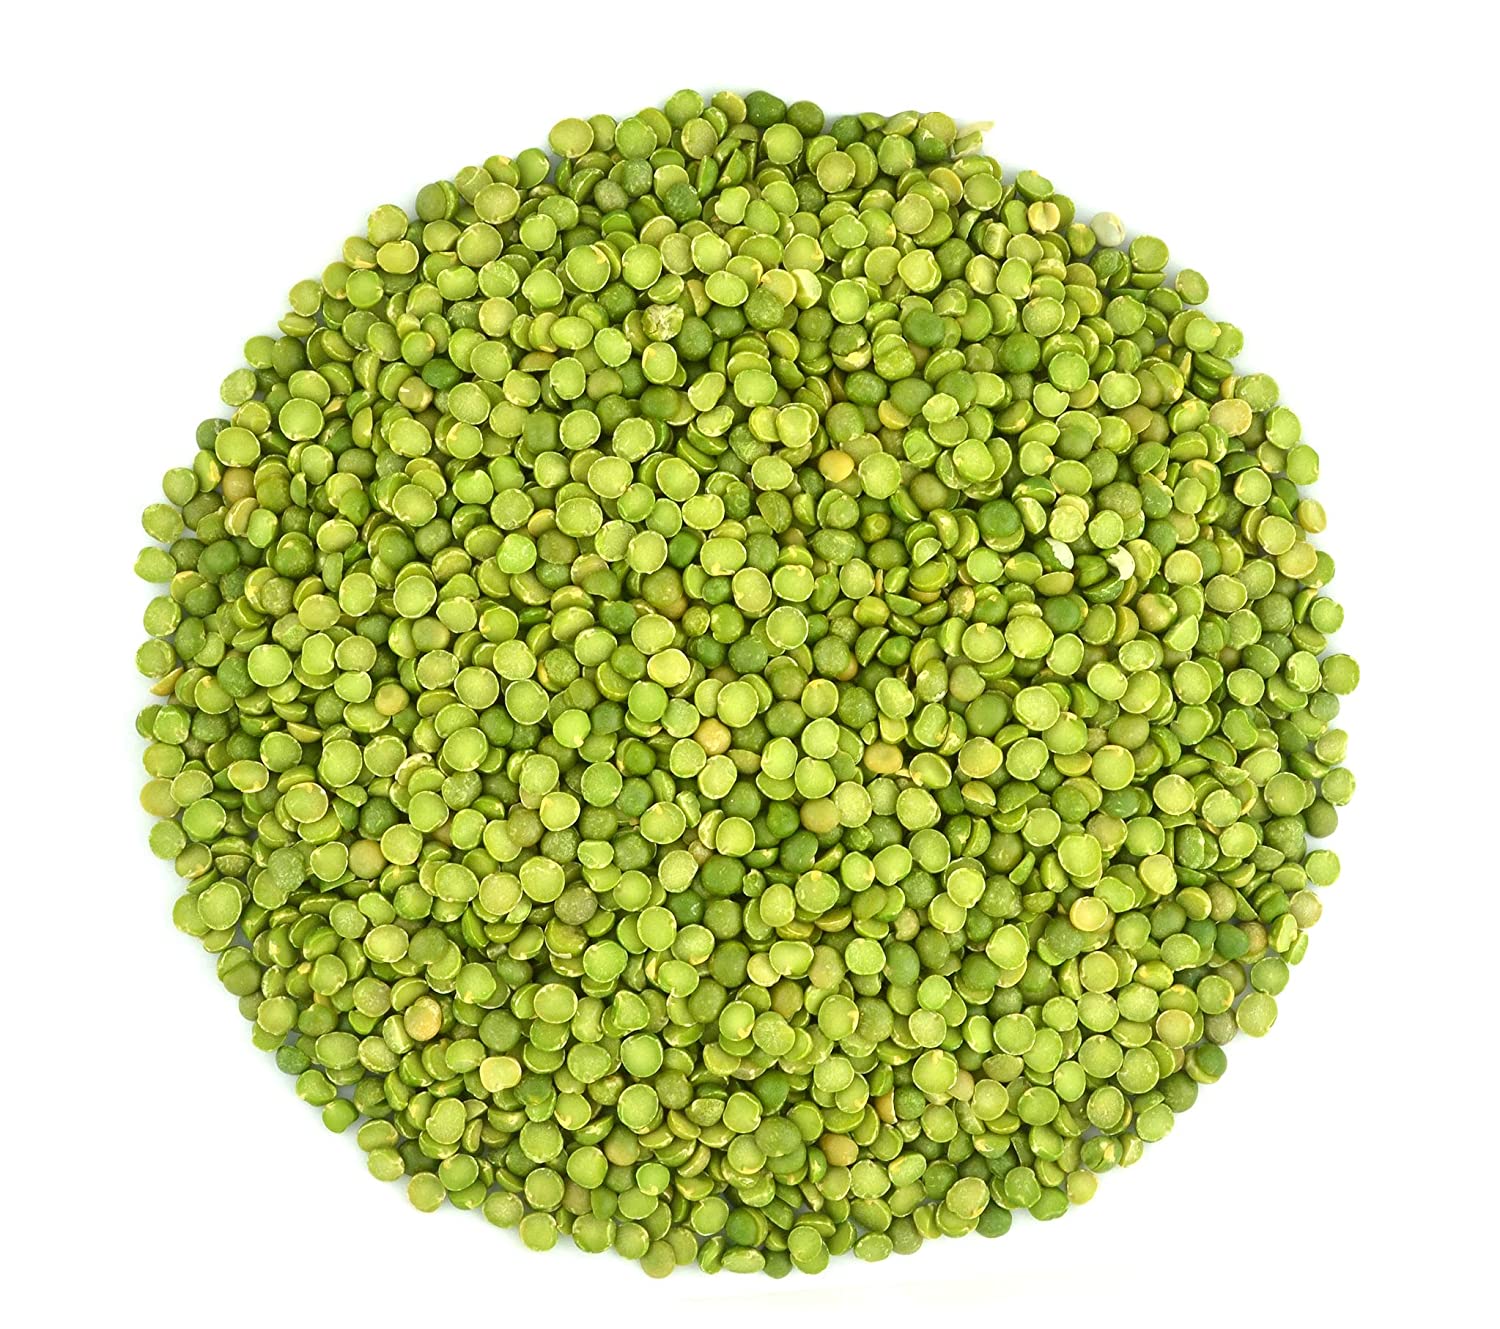 ORGANIC Green Peas